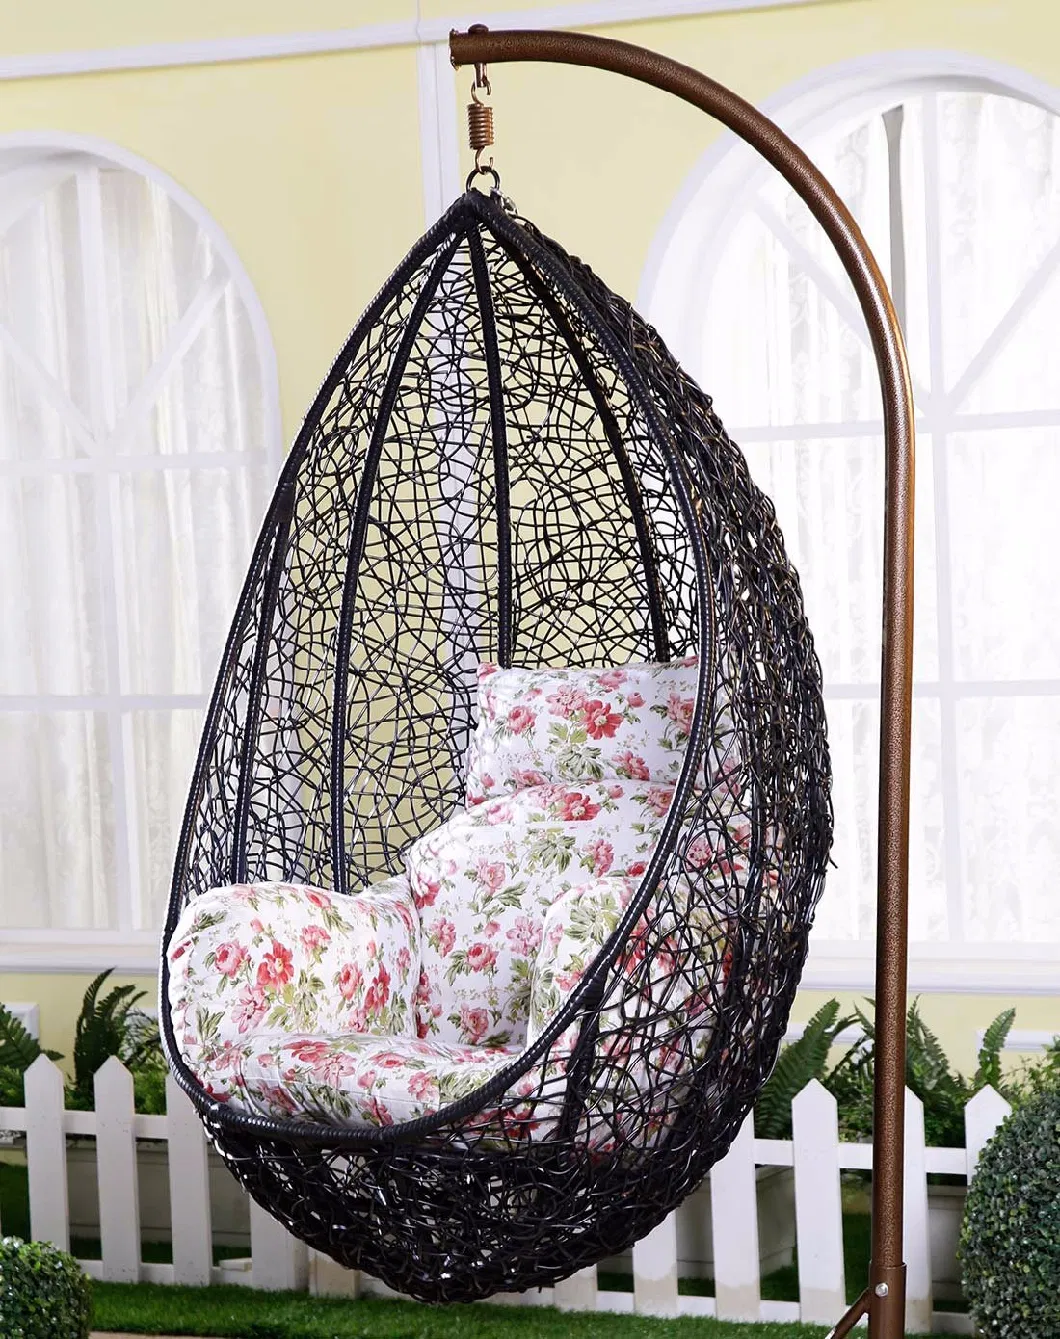 Wholesale Modern Indoor Wicker Egg Garden Hanging Swing Chair Cushion